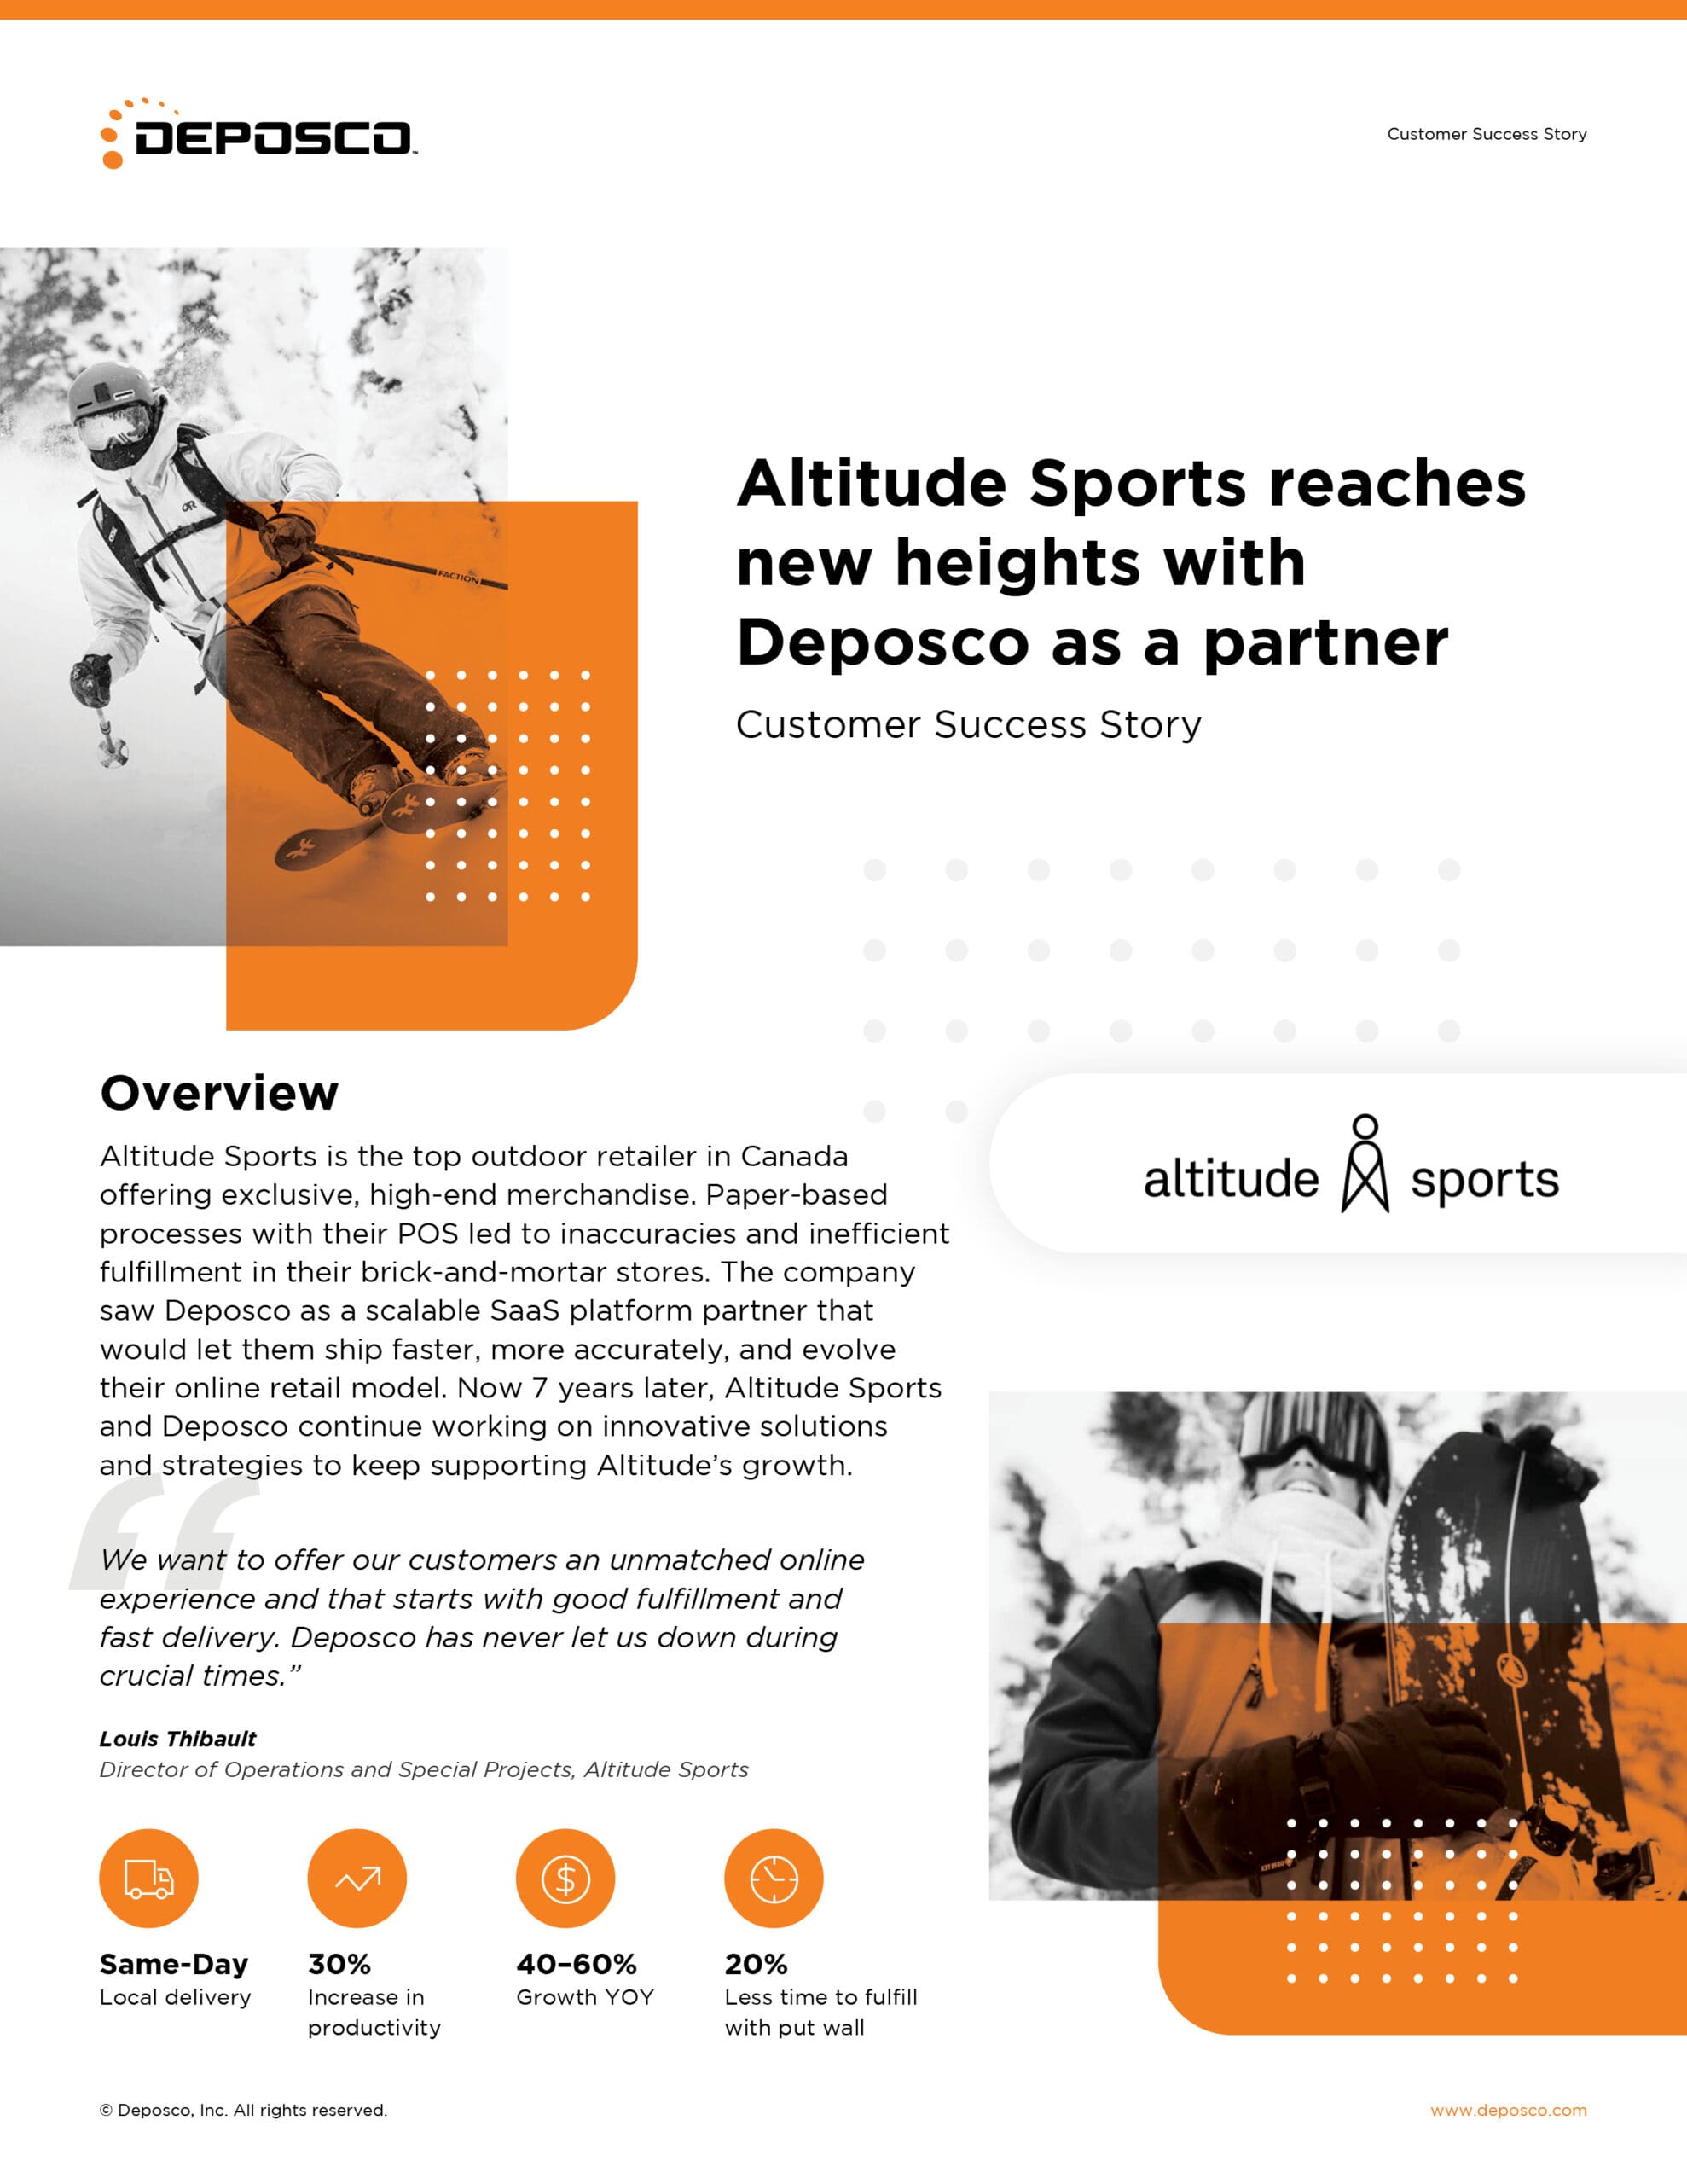 Altitude Sports - Customer Success Story with Deposco